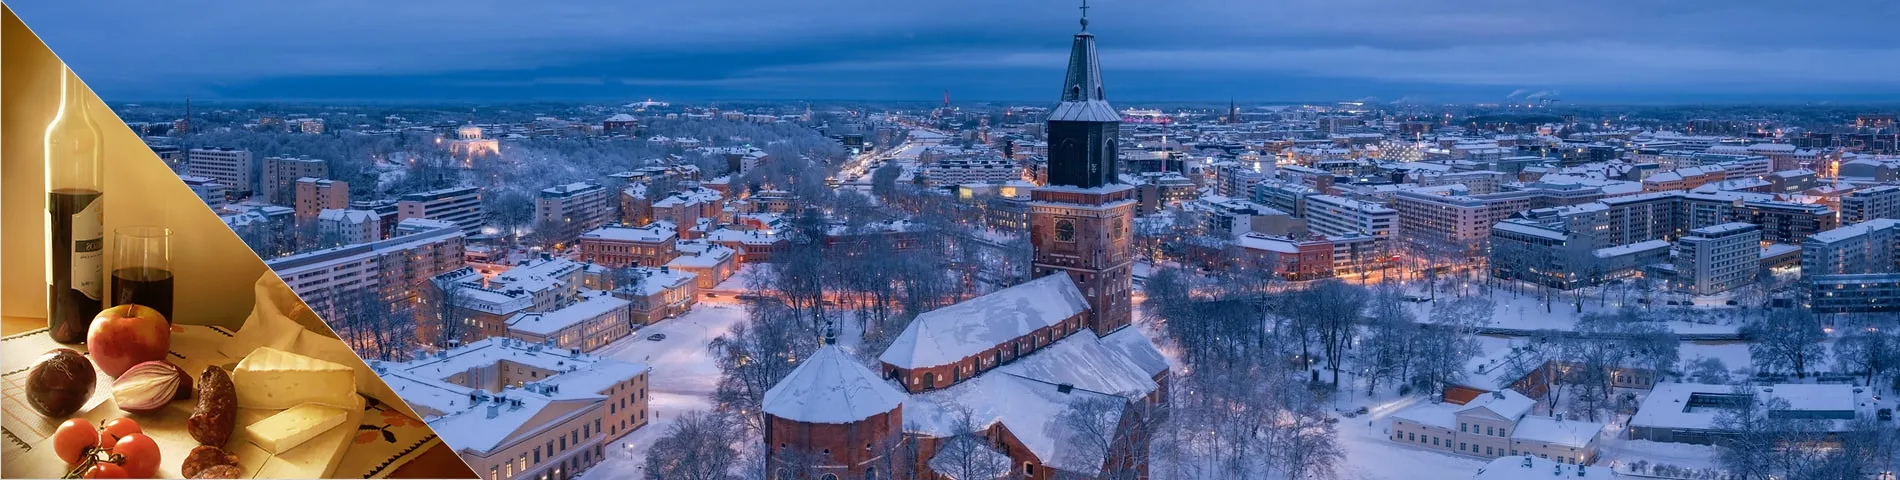 Turku - Fins & cultuur